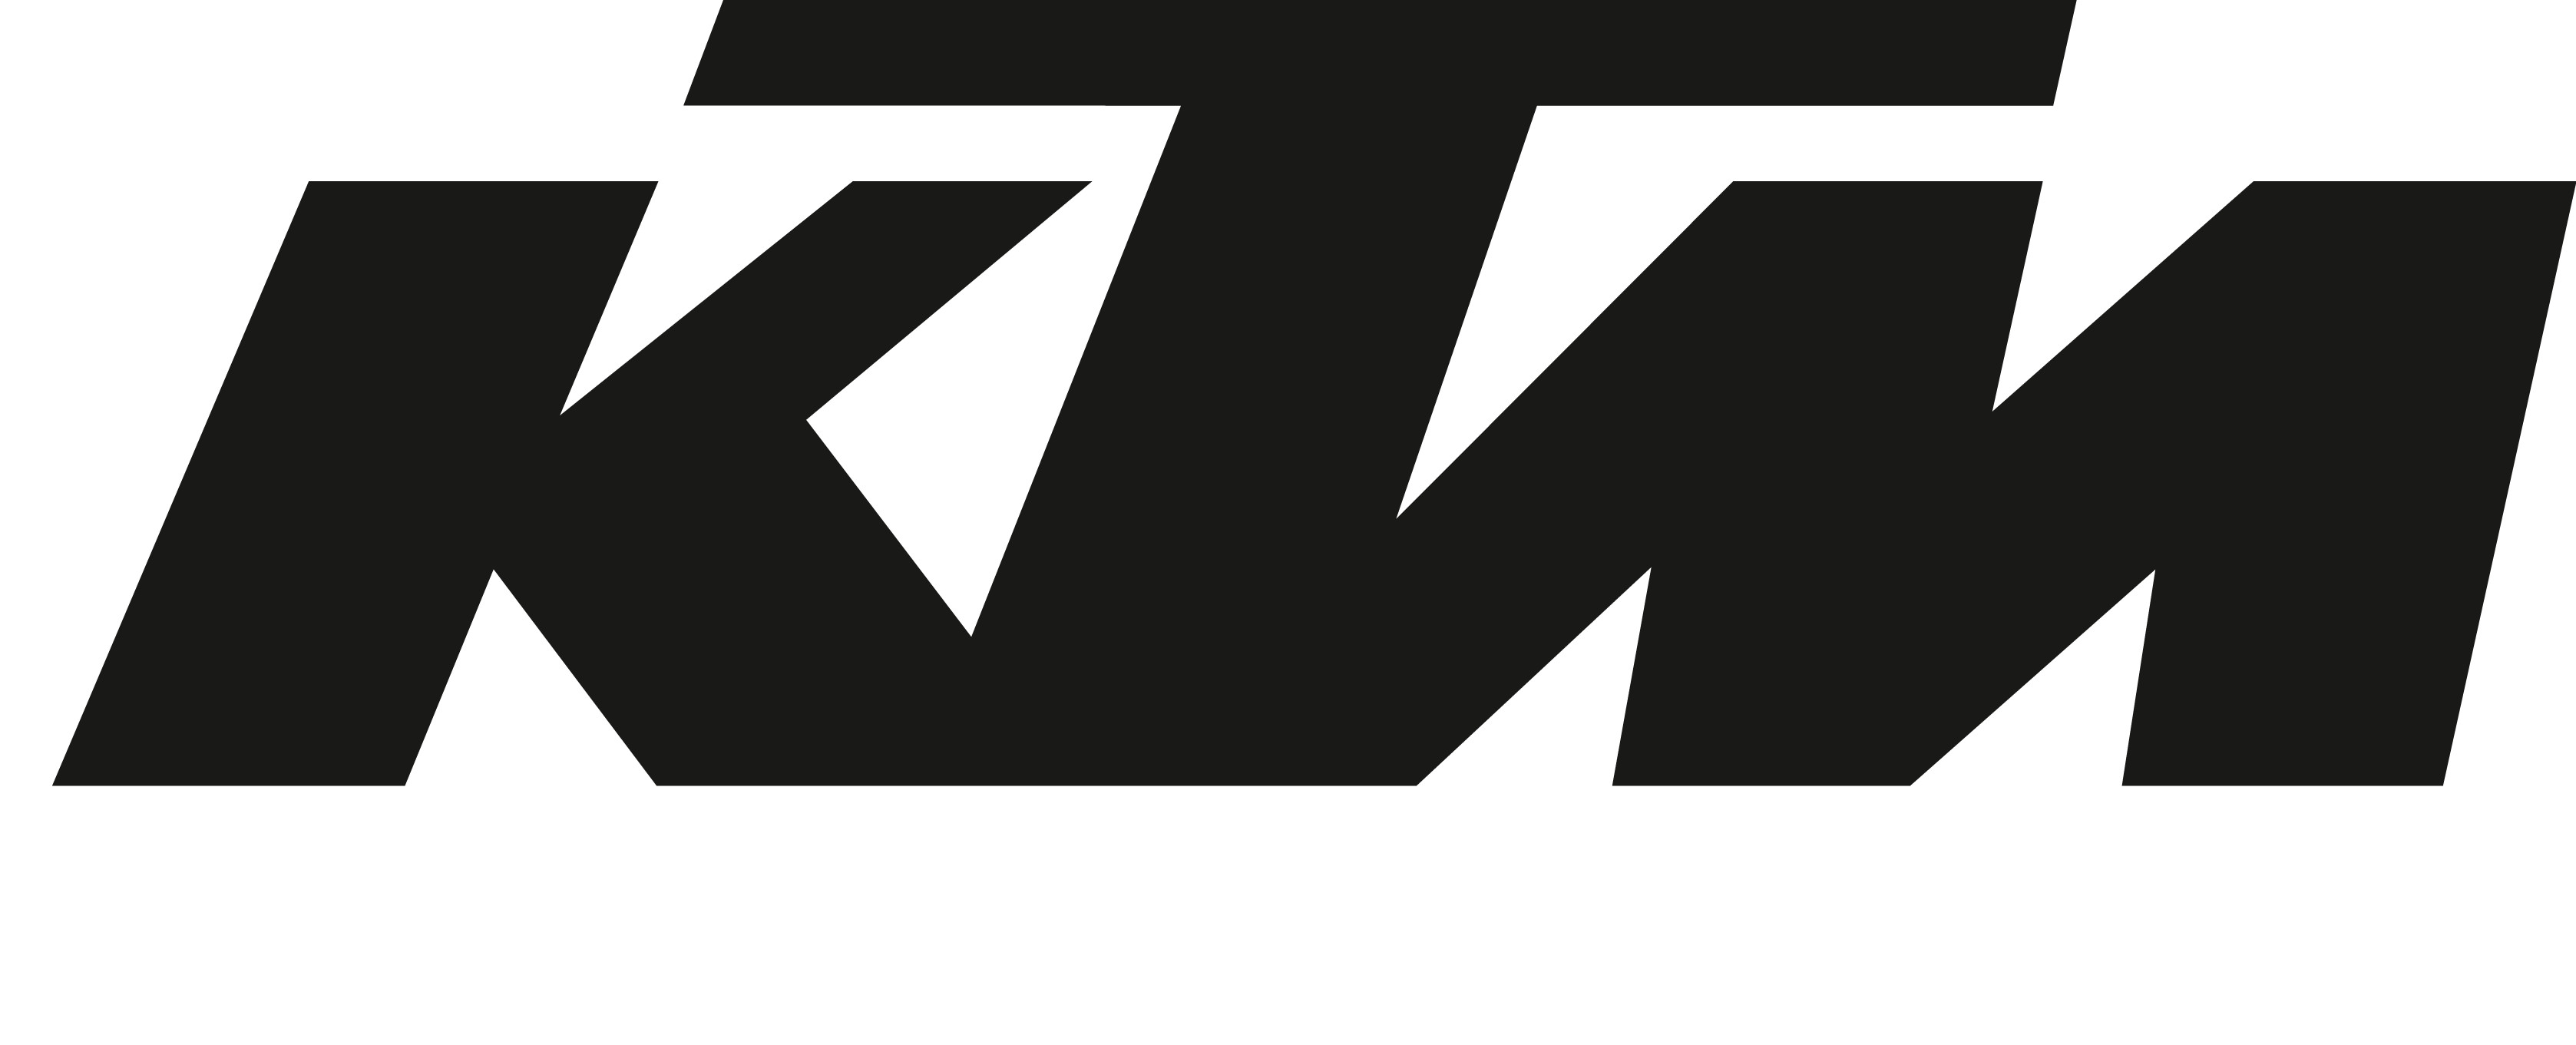 KTM Logo Wallpapers - Wallpaper Cave